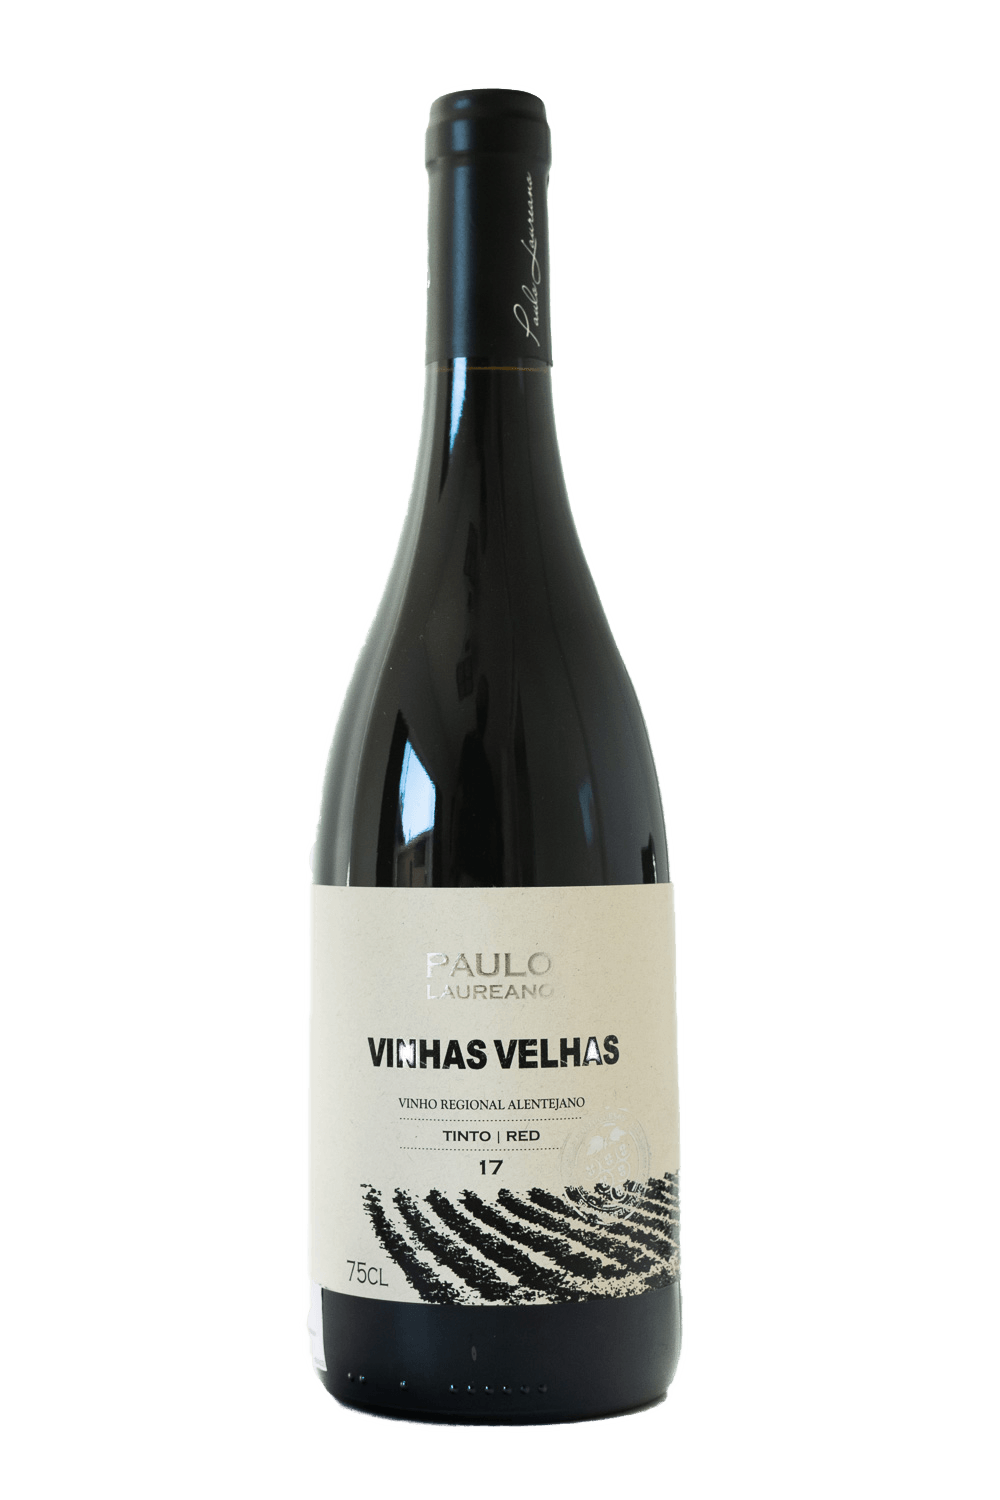 Paulo Laureano - Vinhas Velhas 2017 - The Blend Wines